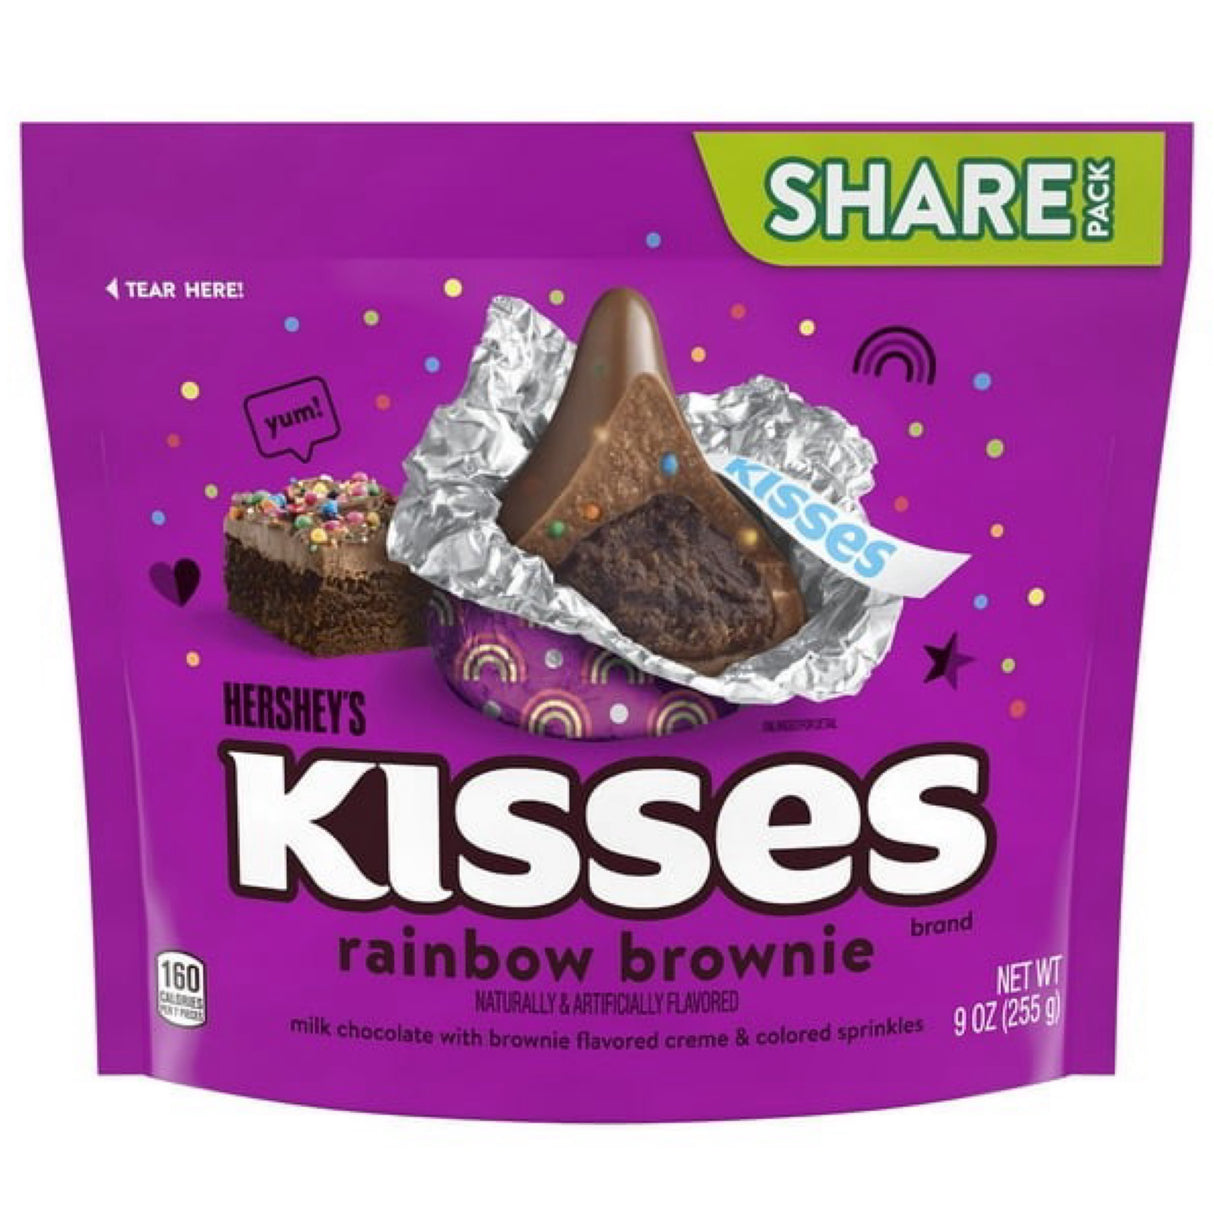 Hershey's Kisses Rainbow Brownie